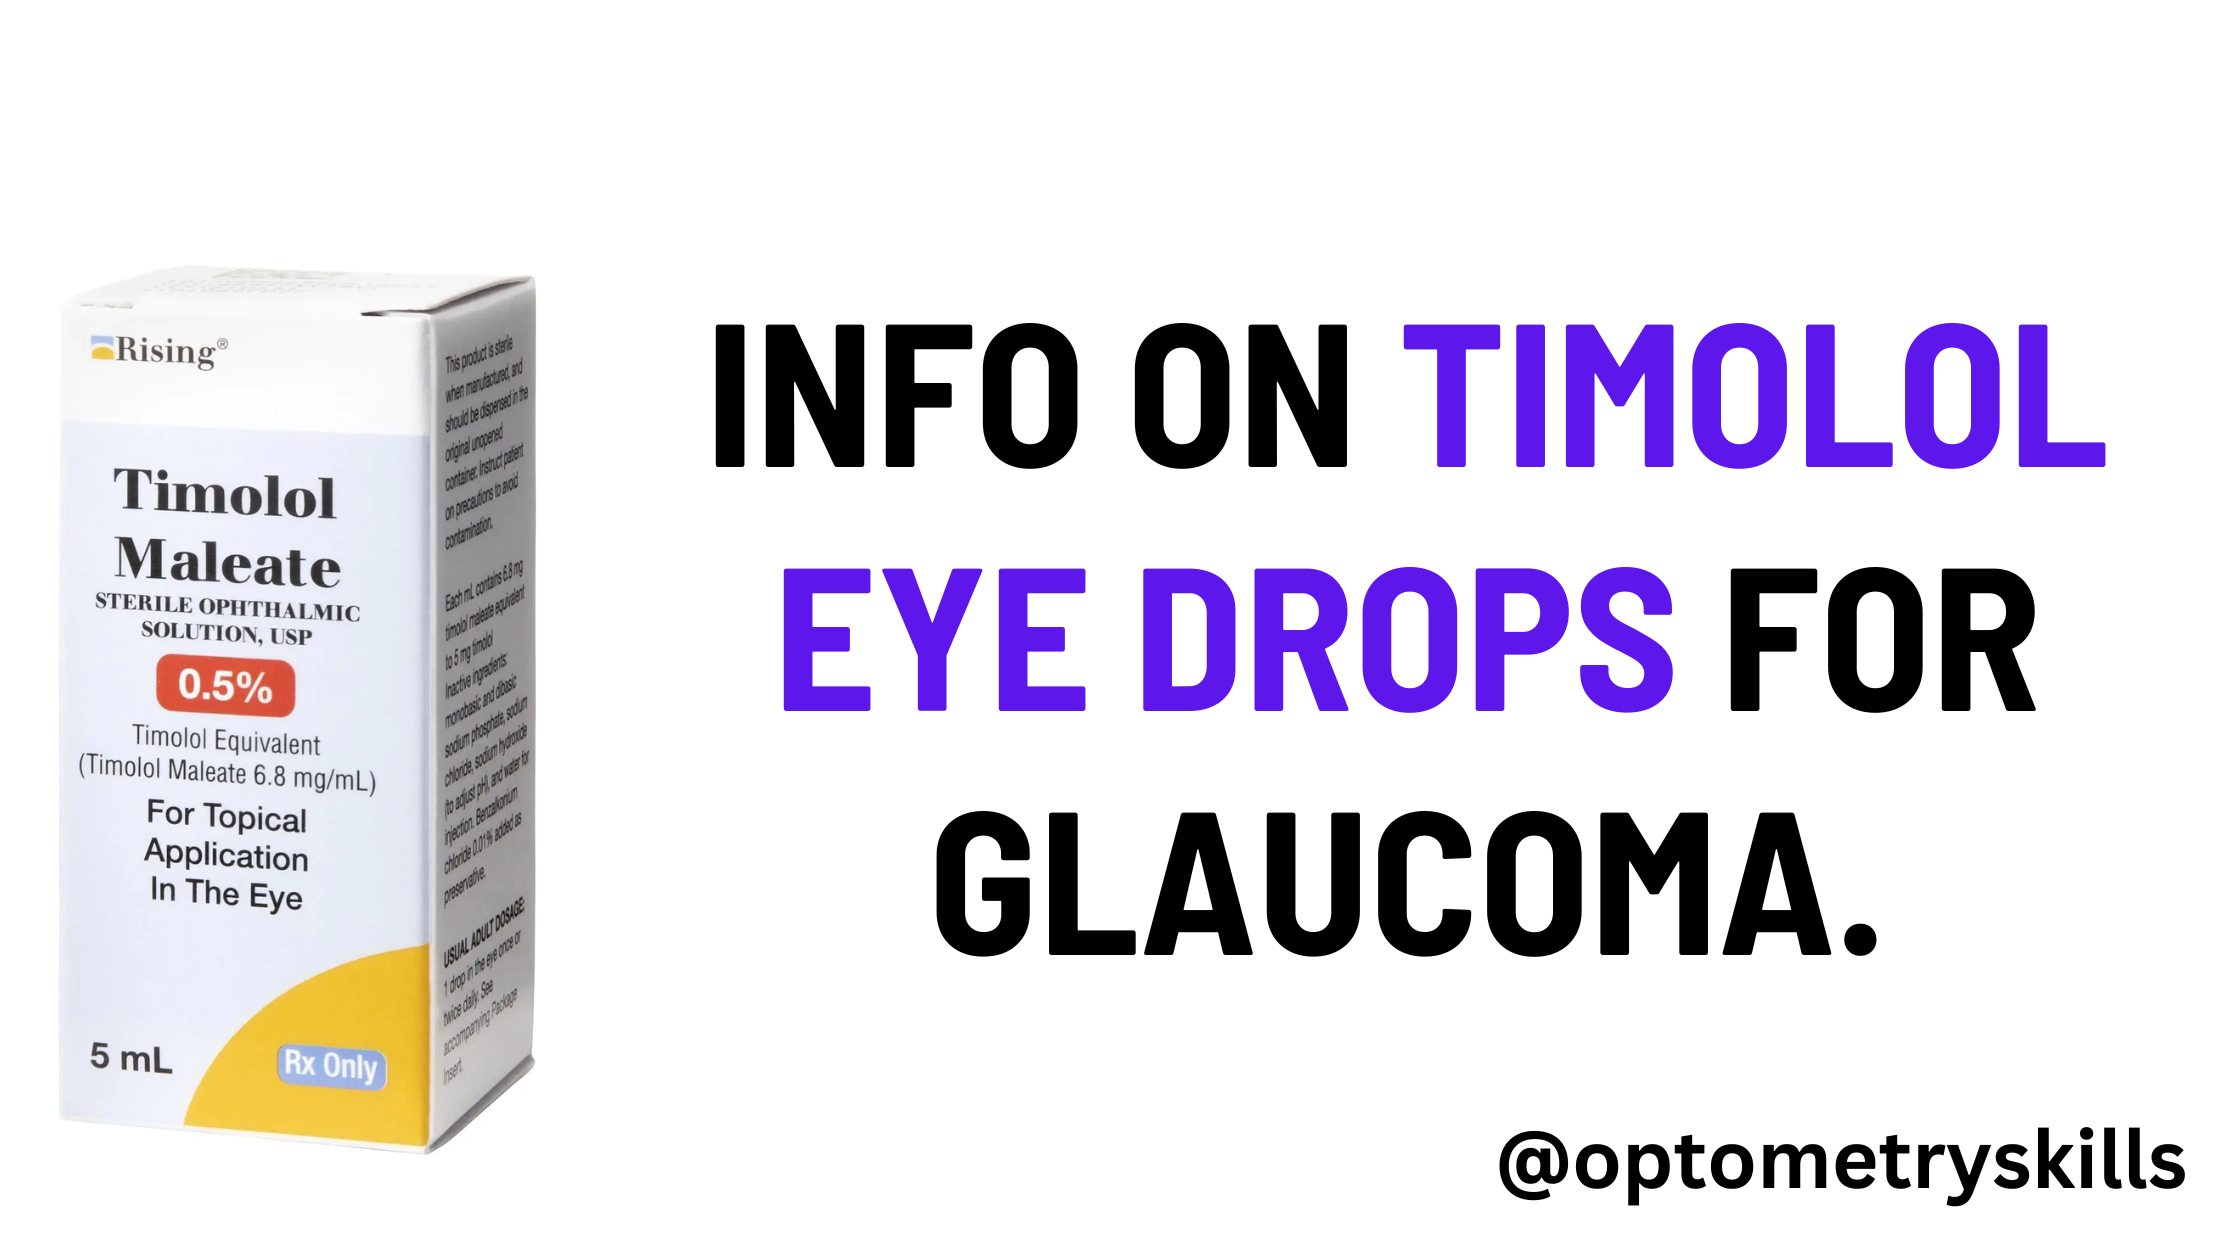 Timolol eye drops for glaucoma